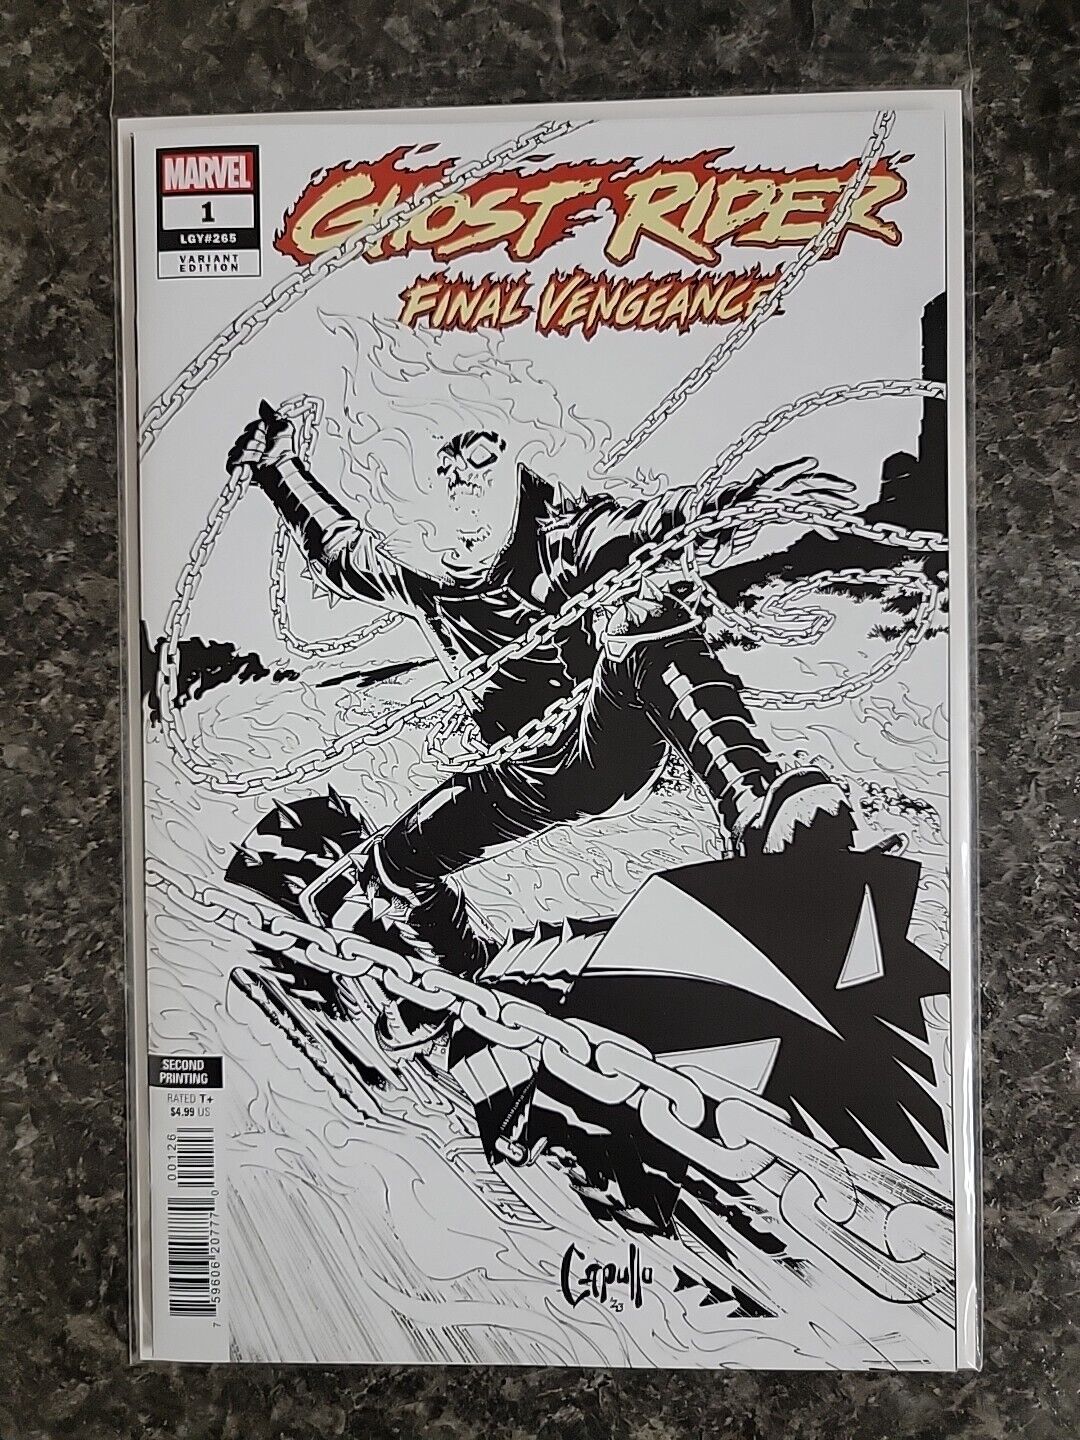 Ghost Rider Final Vengeance #1 NM+ Capullo 1:25 2nd Print Variant